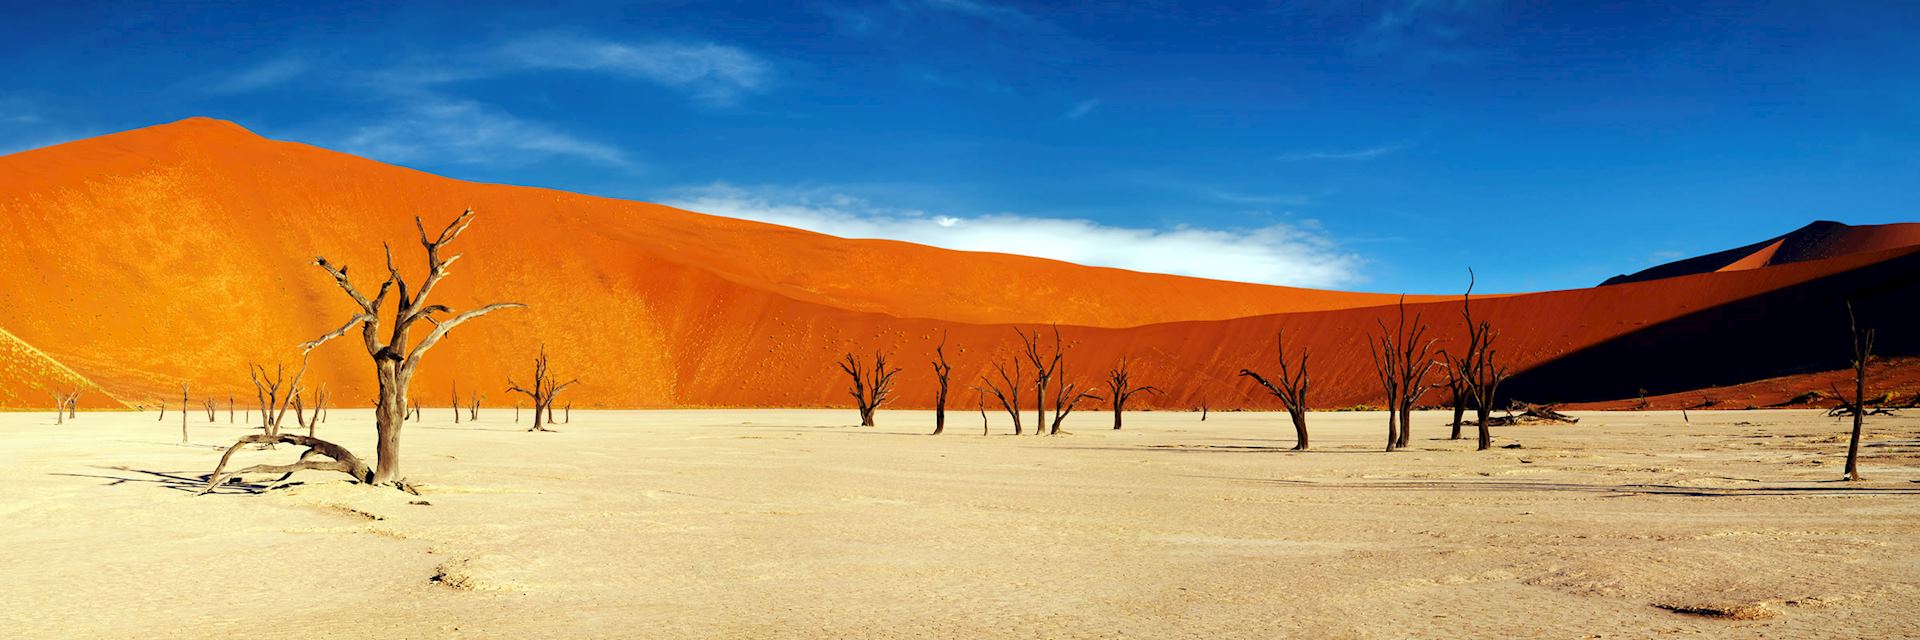 Sand dunes at Sossusvlei, Namib-Naukluft National Park